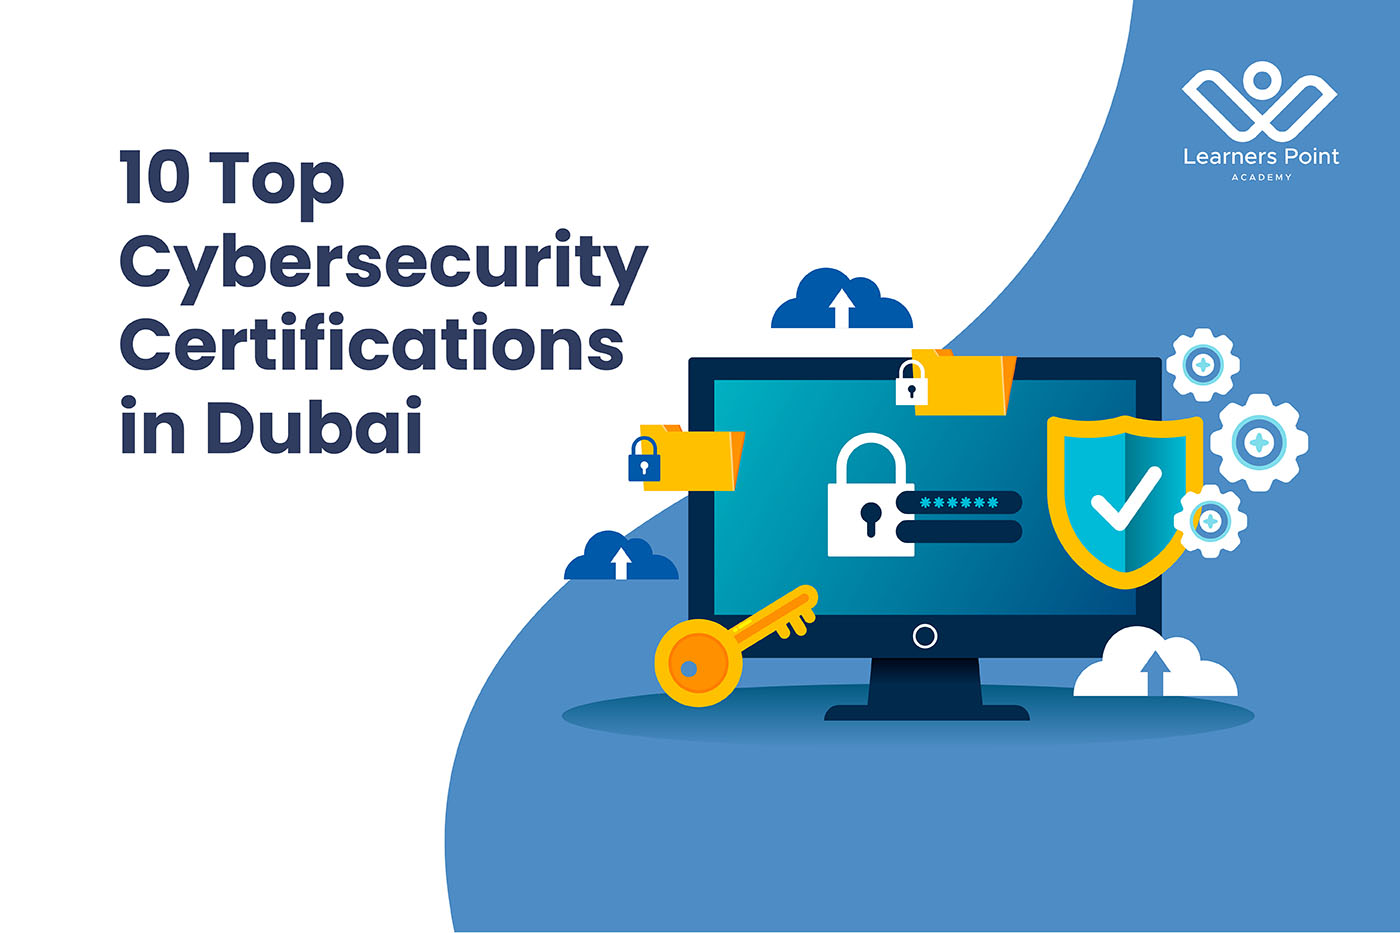 10 Top Cybersecurity Certifications in Dubai